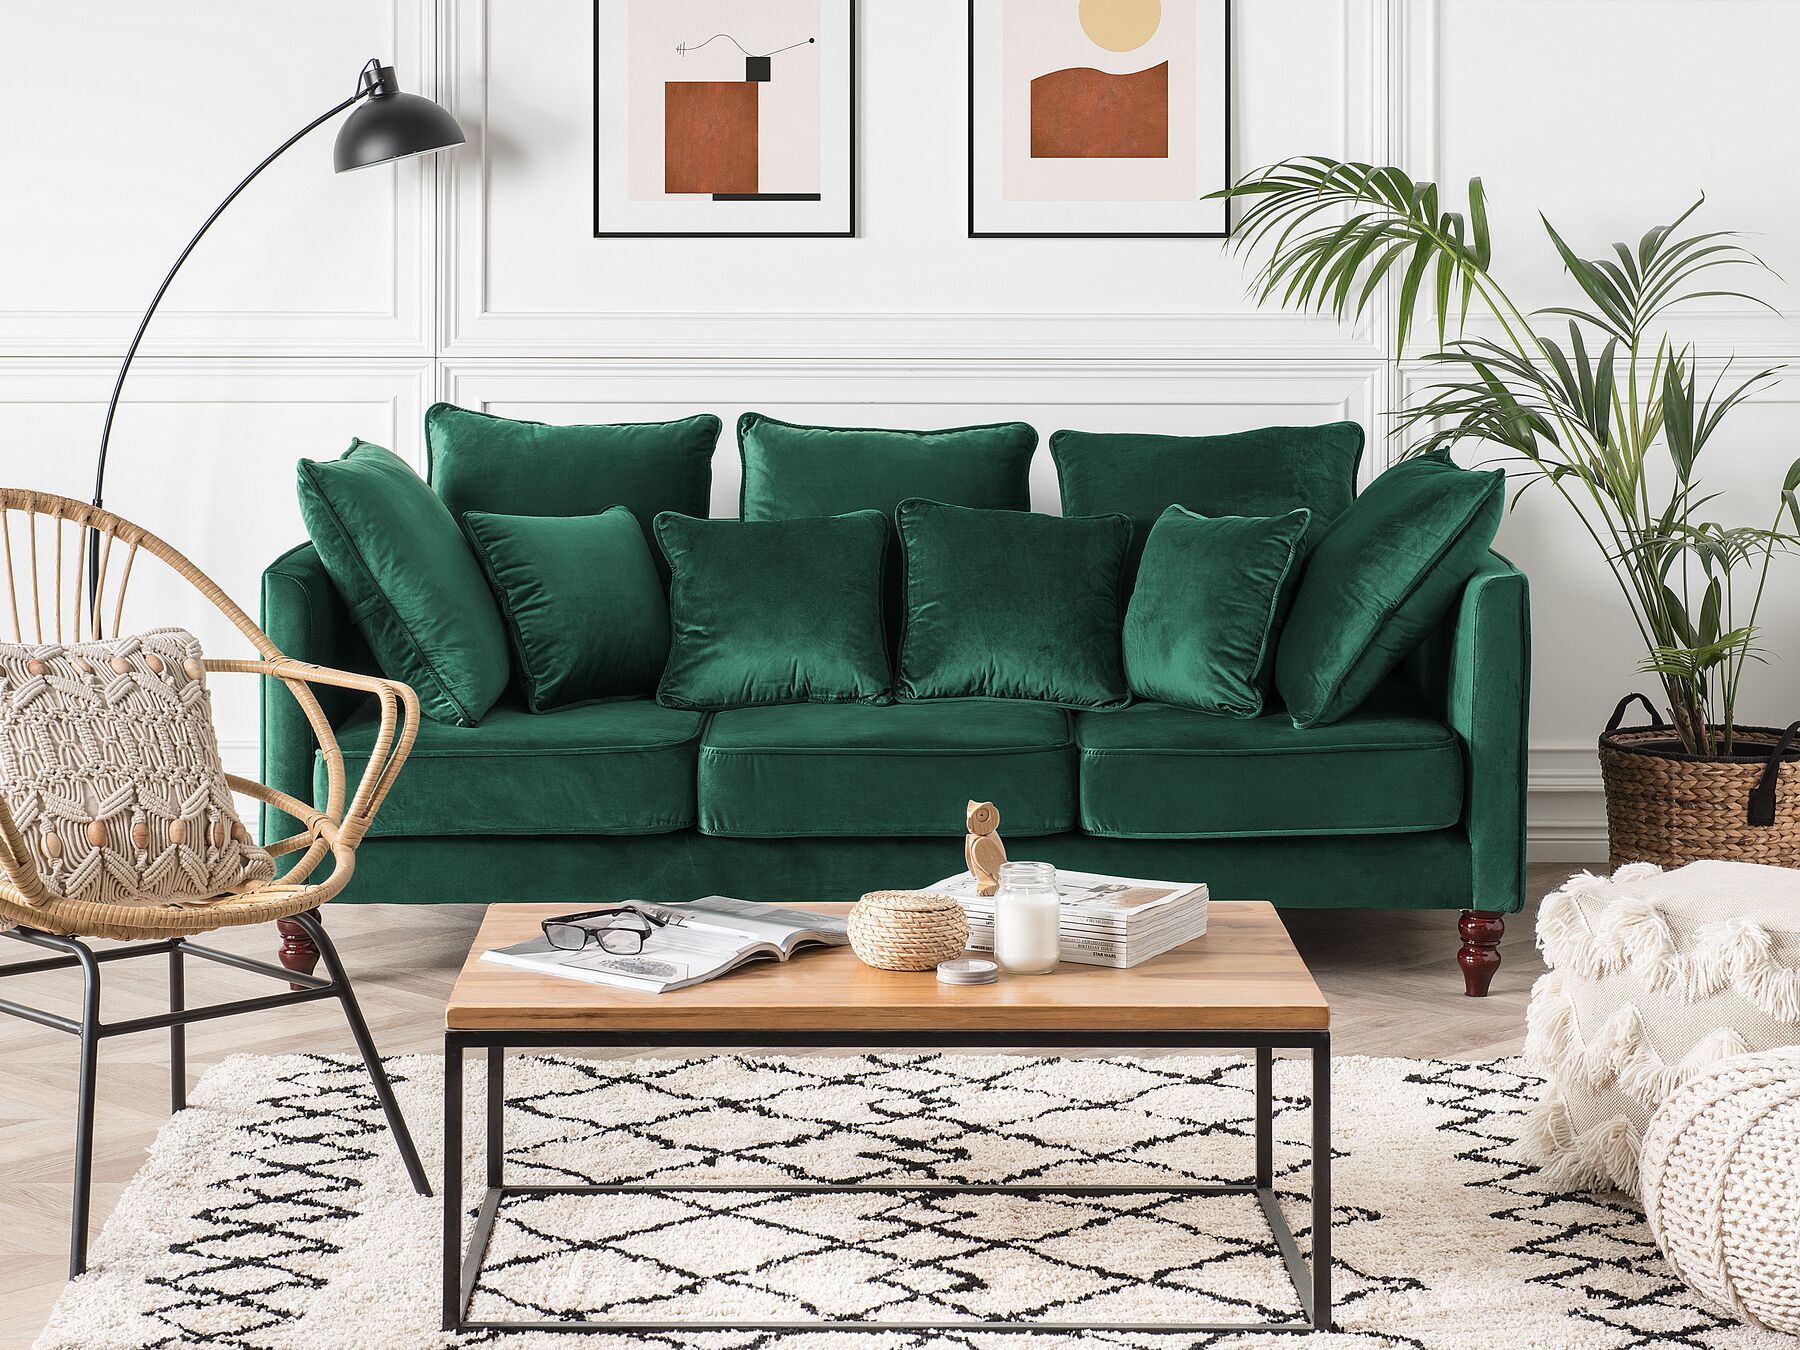 Living Room With Dark Green Sofa